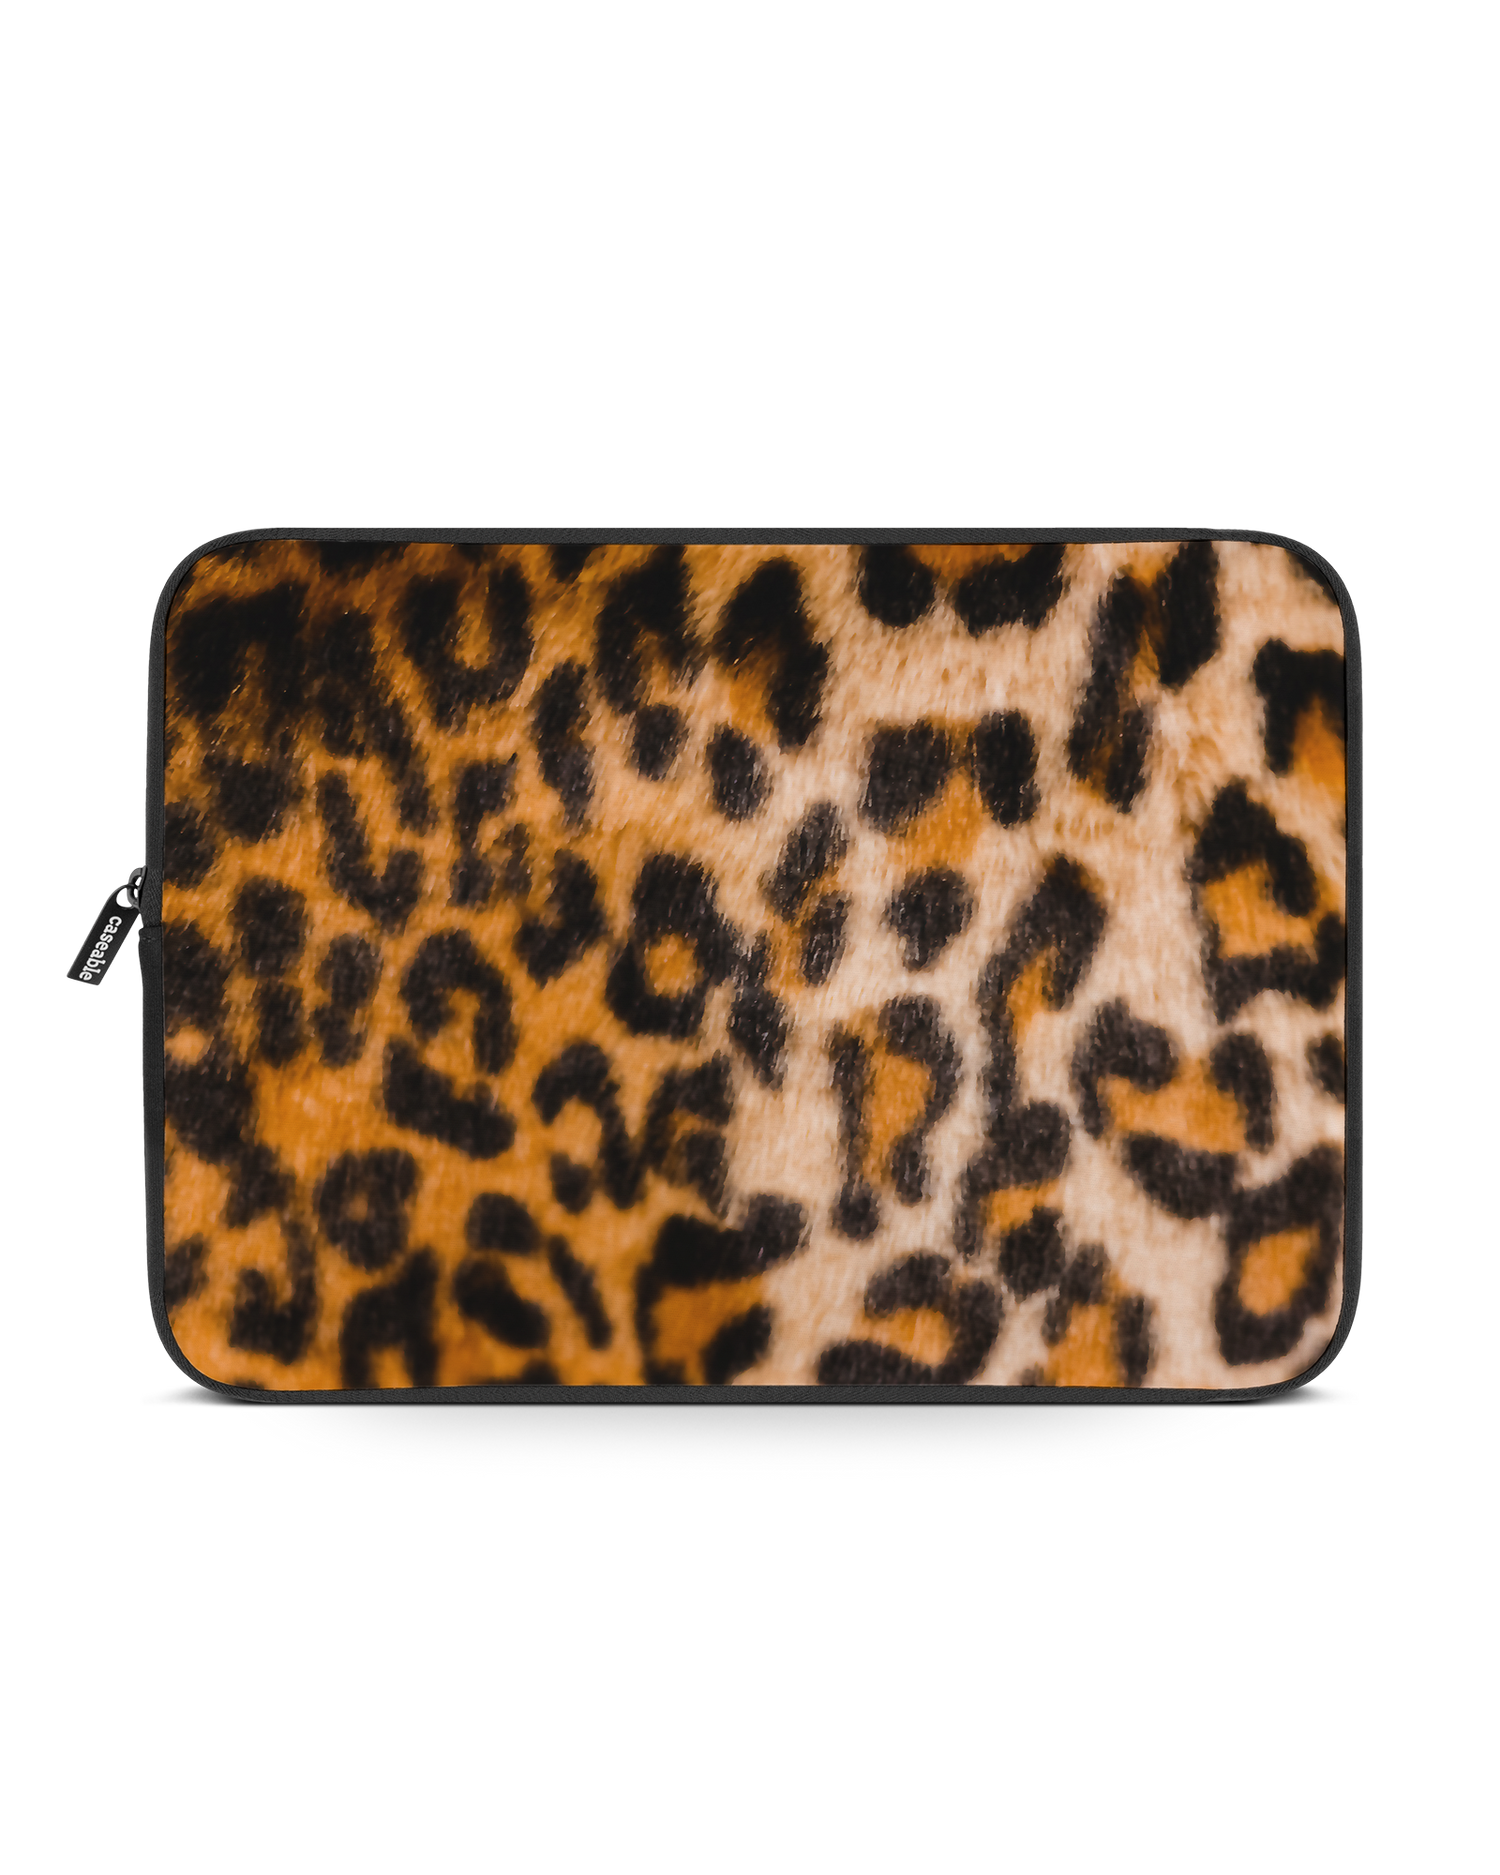 Leopard Pattern Laptop Case 14-15 inch: Front View